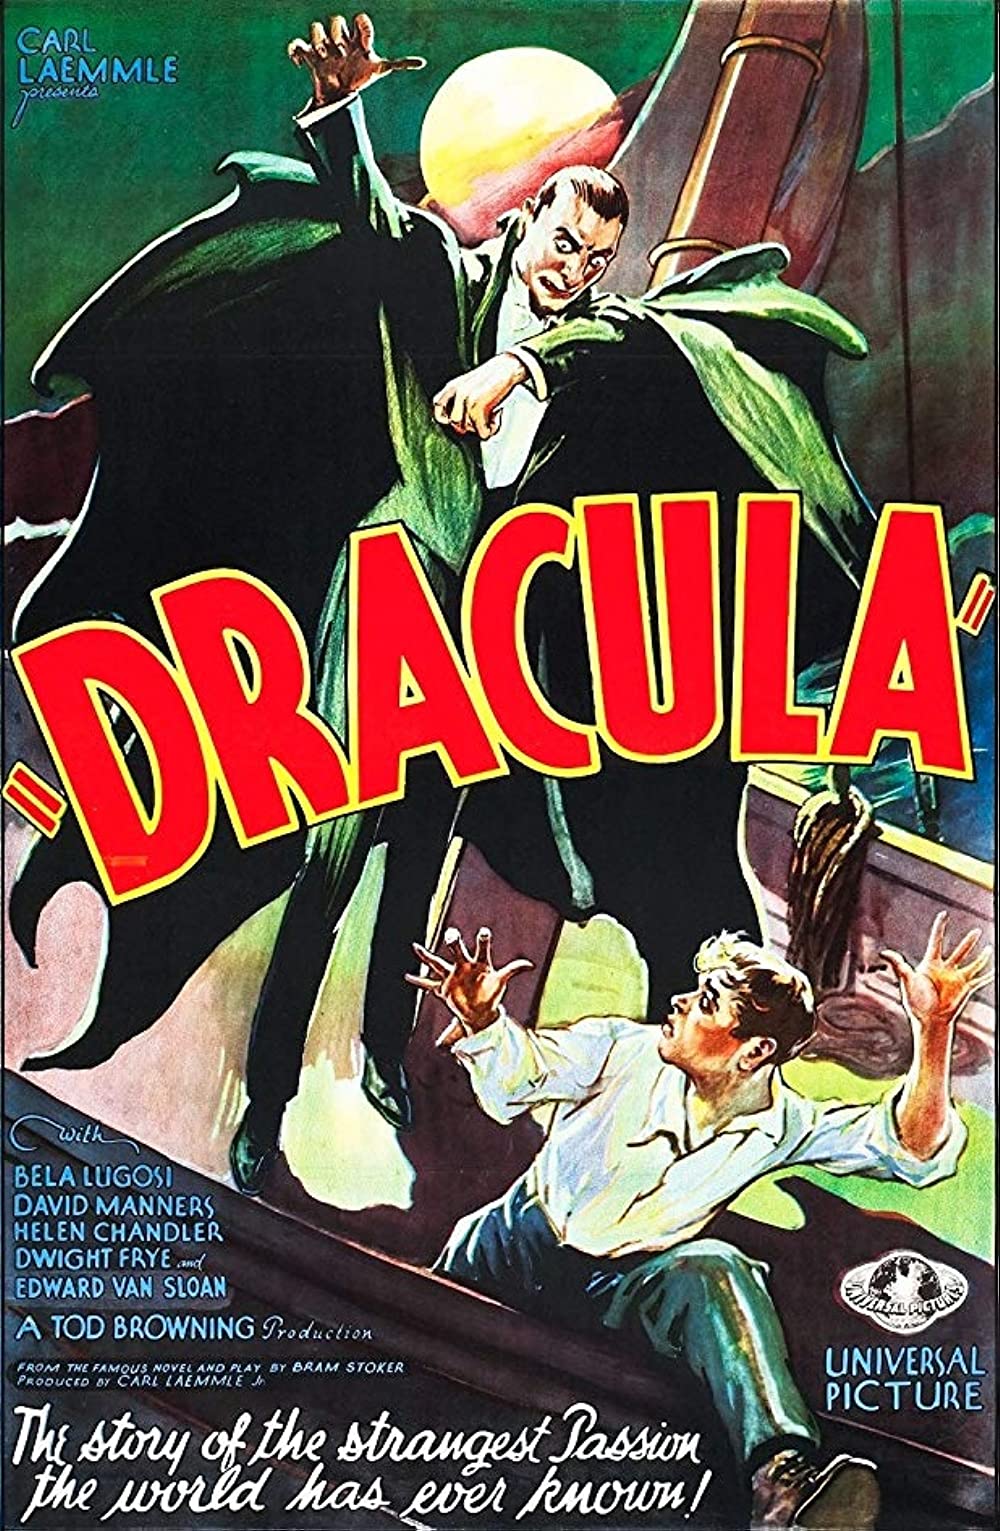 Filmbeschreibung zu Dracula (1958)